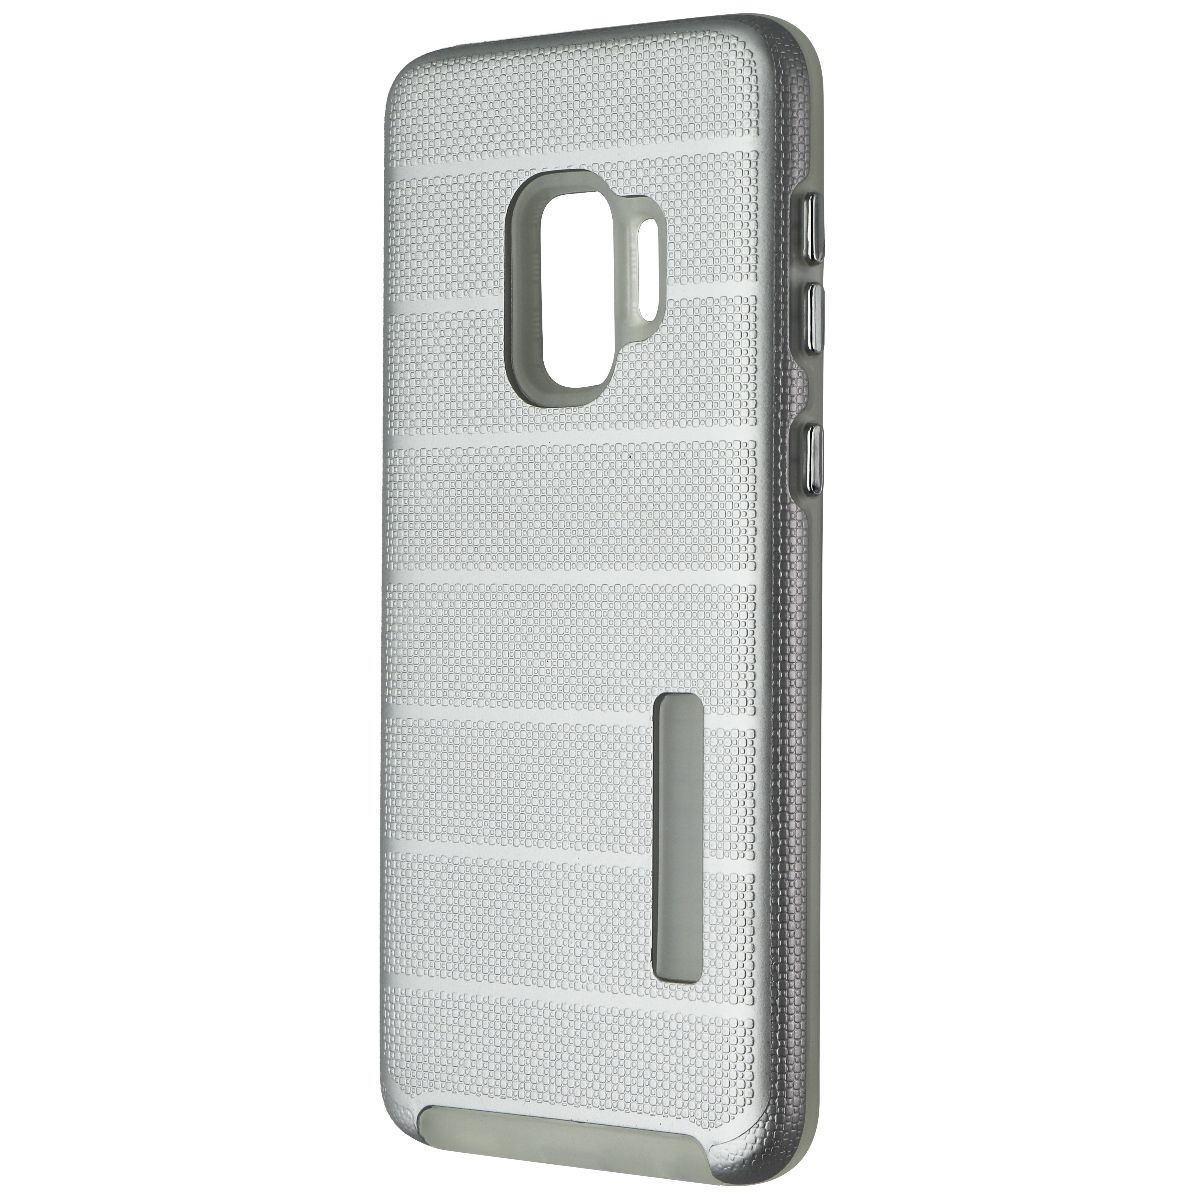 MyBat Advanced Armor Series Case For Samsung Galaxy S9 - Silver/Clear (Refurbished)